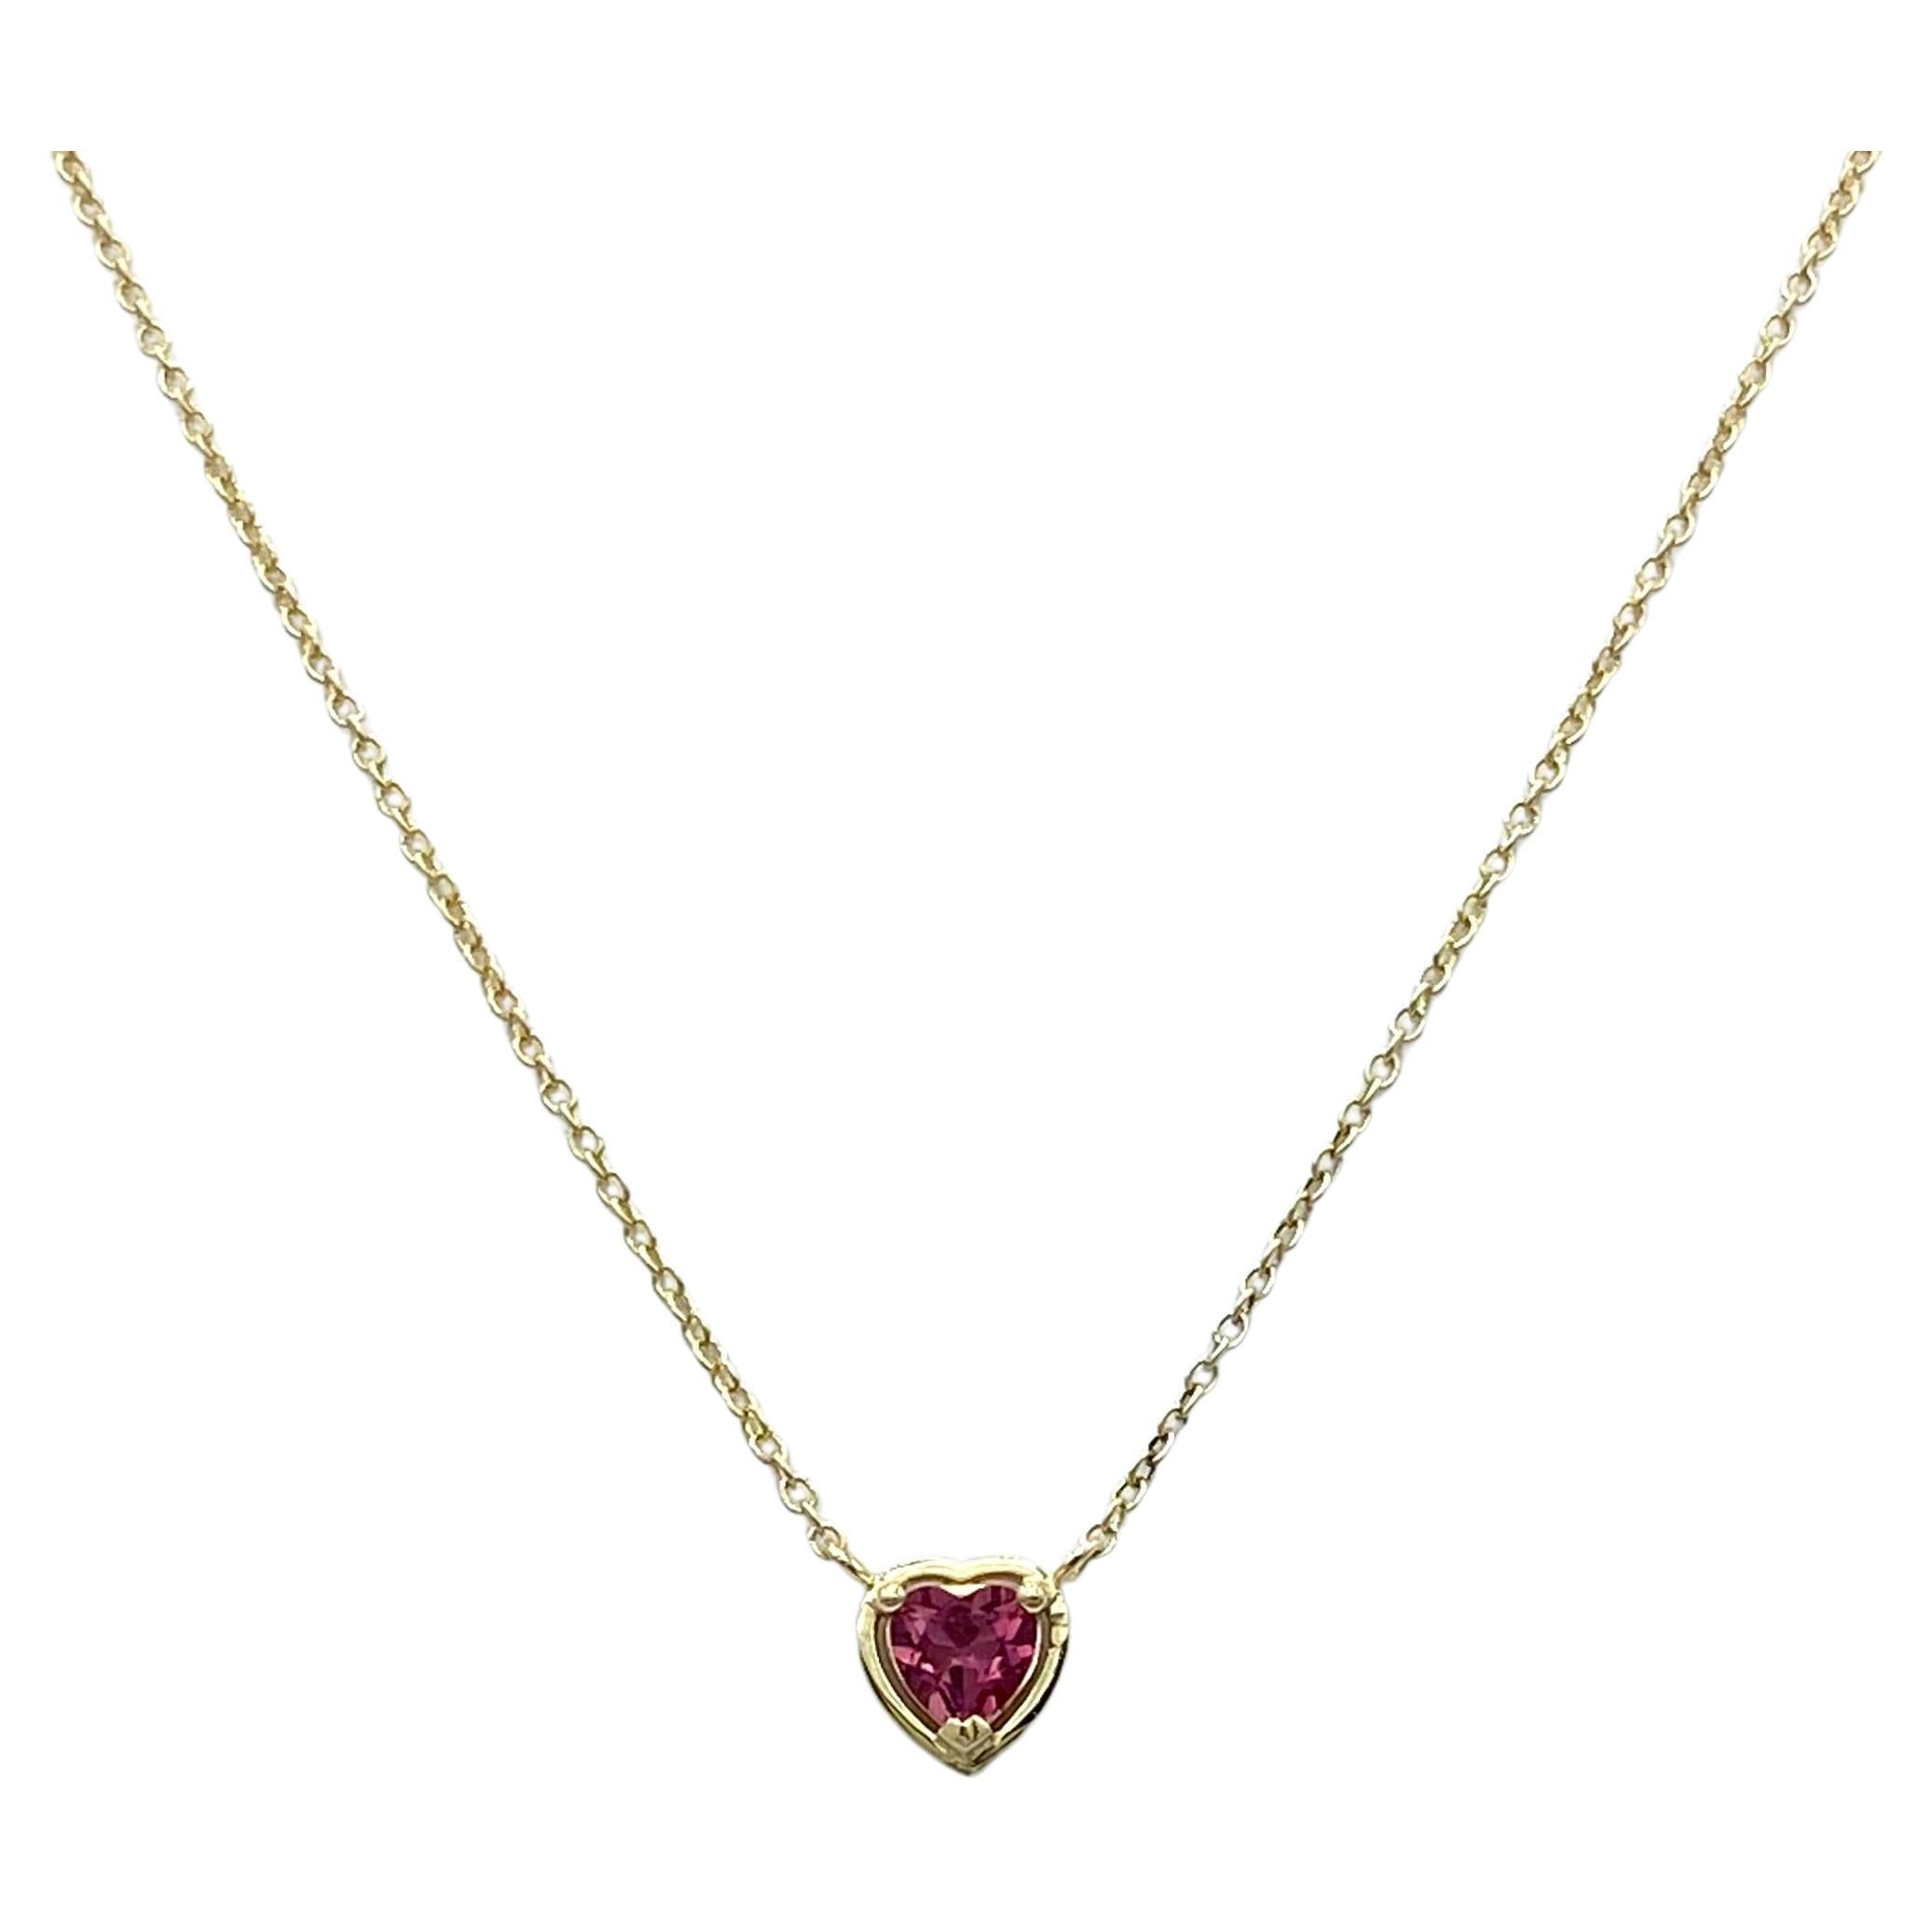 Collana en Oro 18 carats avec cœur central en tormalina rose, fabriqué en Italie